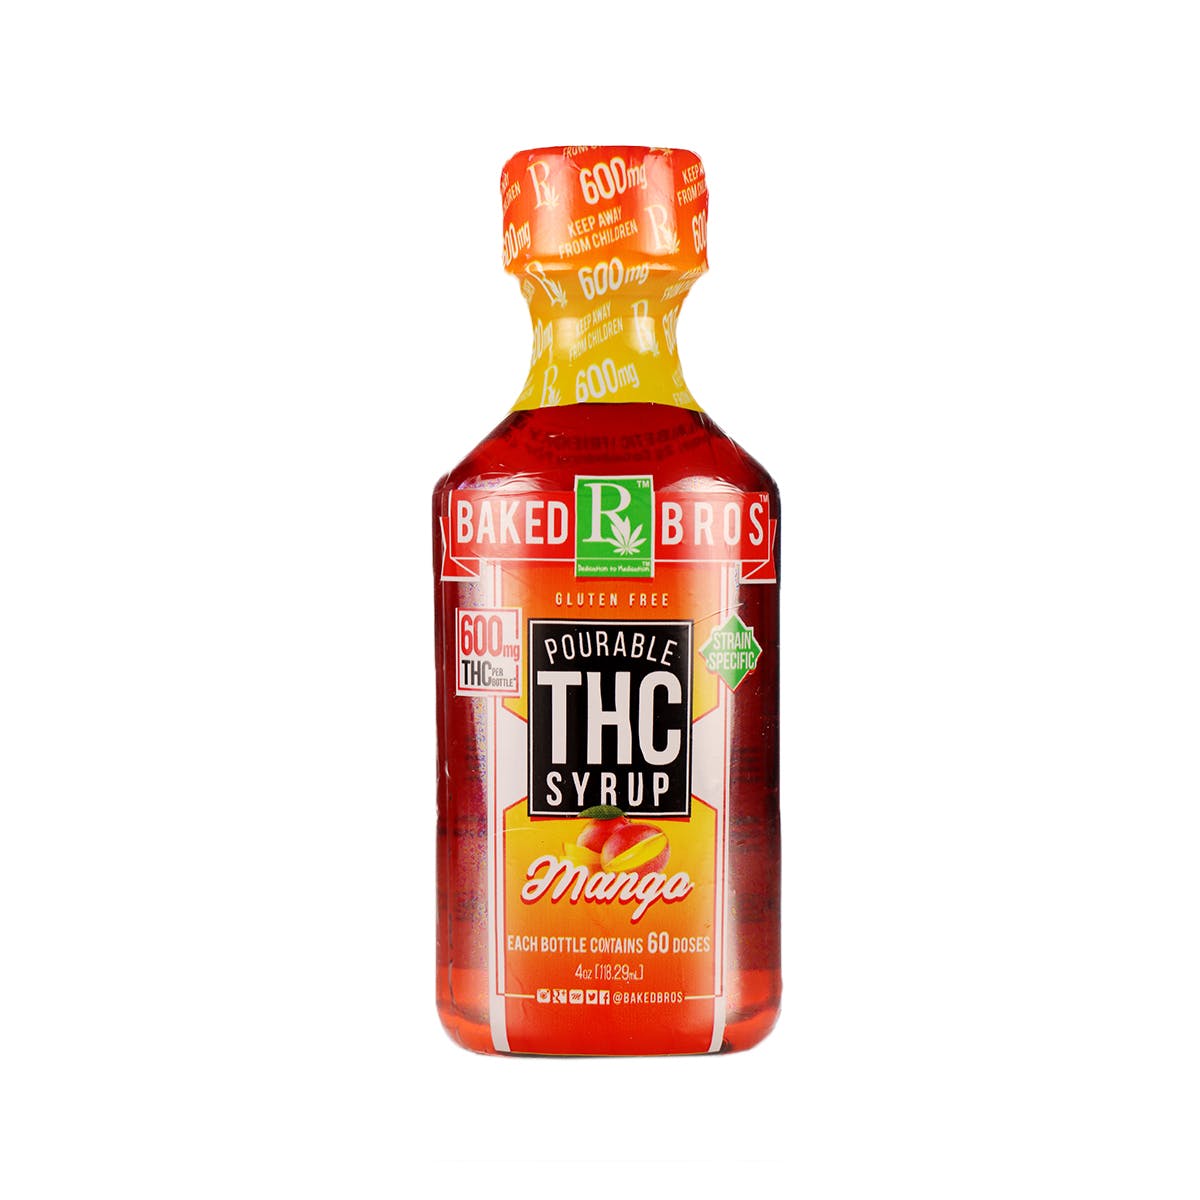 THC Syrup Mango 600mg